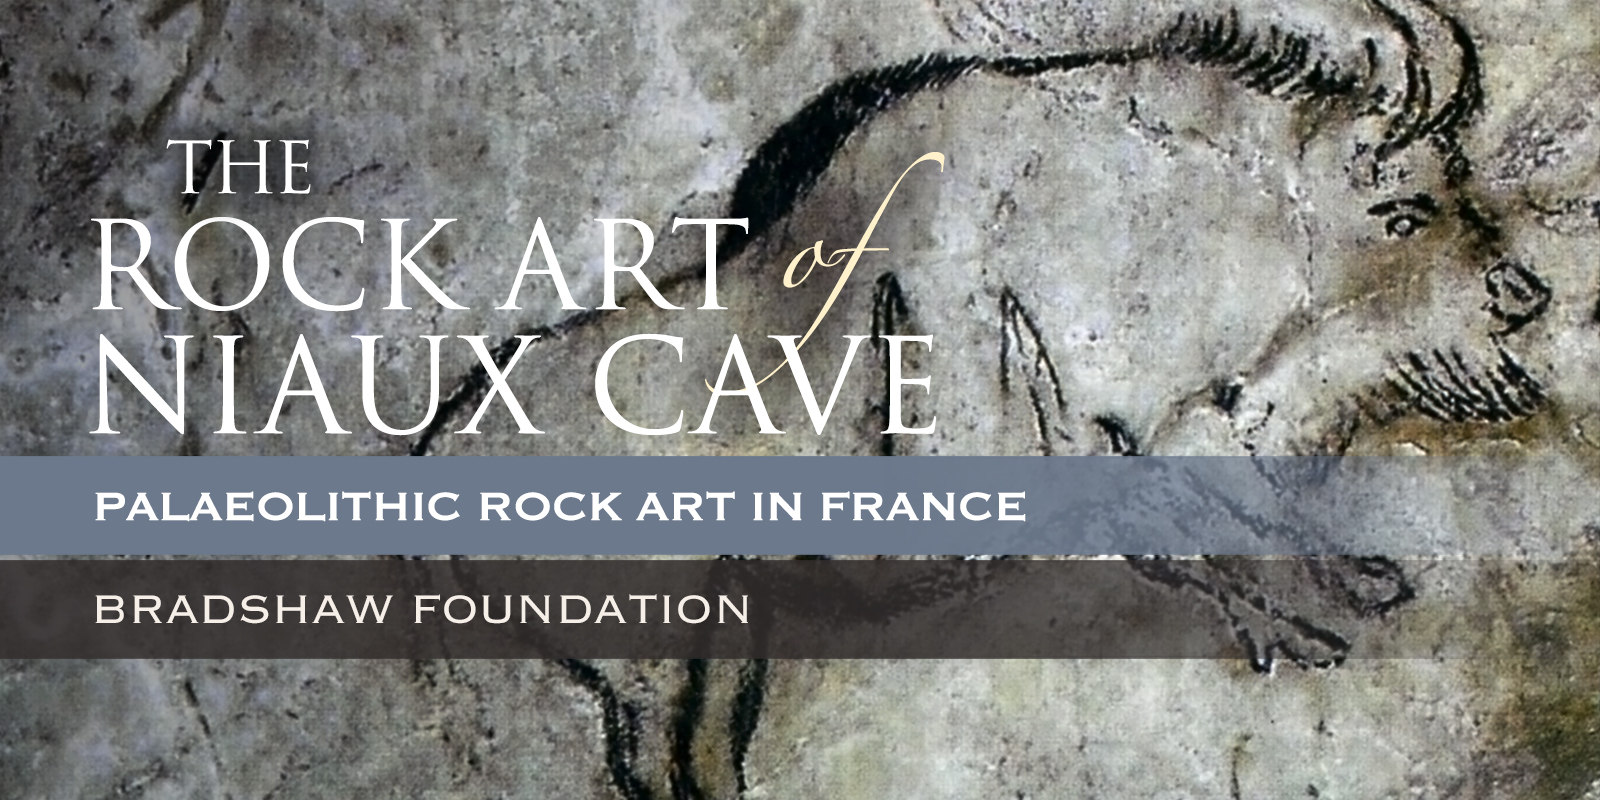 Bradshaw Foundation Palaeolithic Cave Art Paintings Niaux Cave France